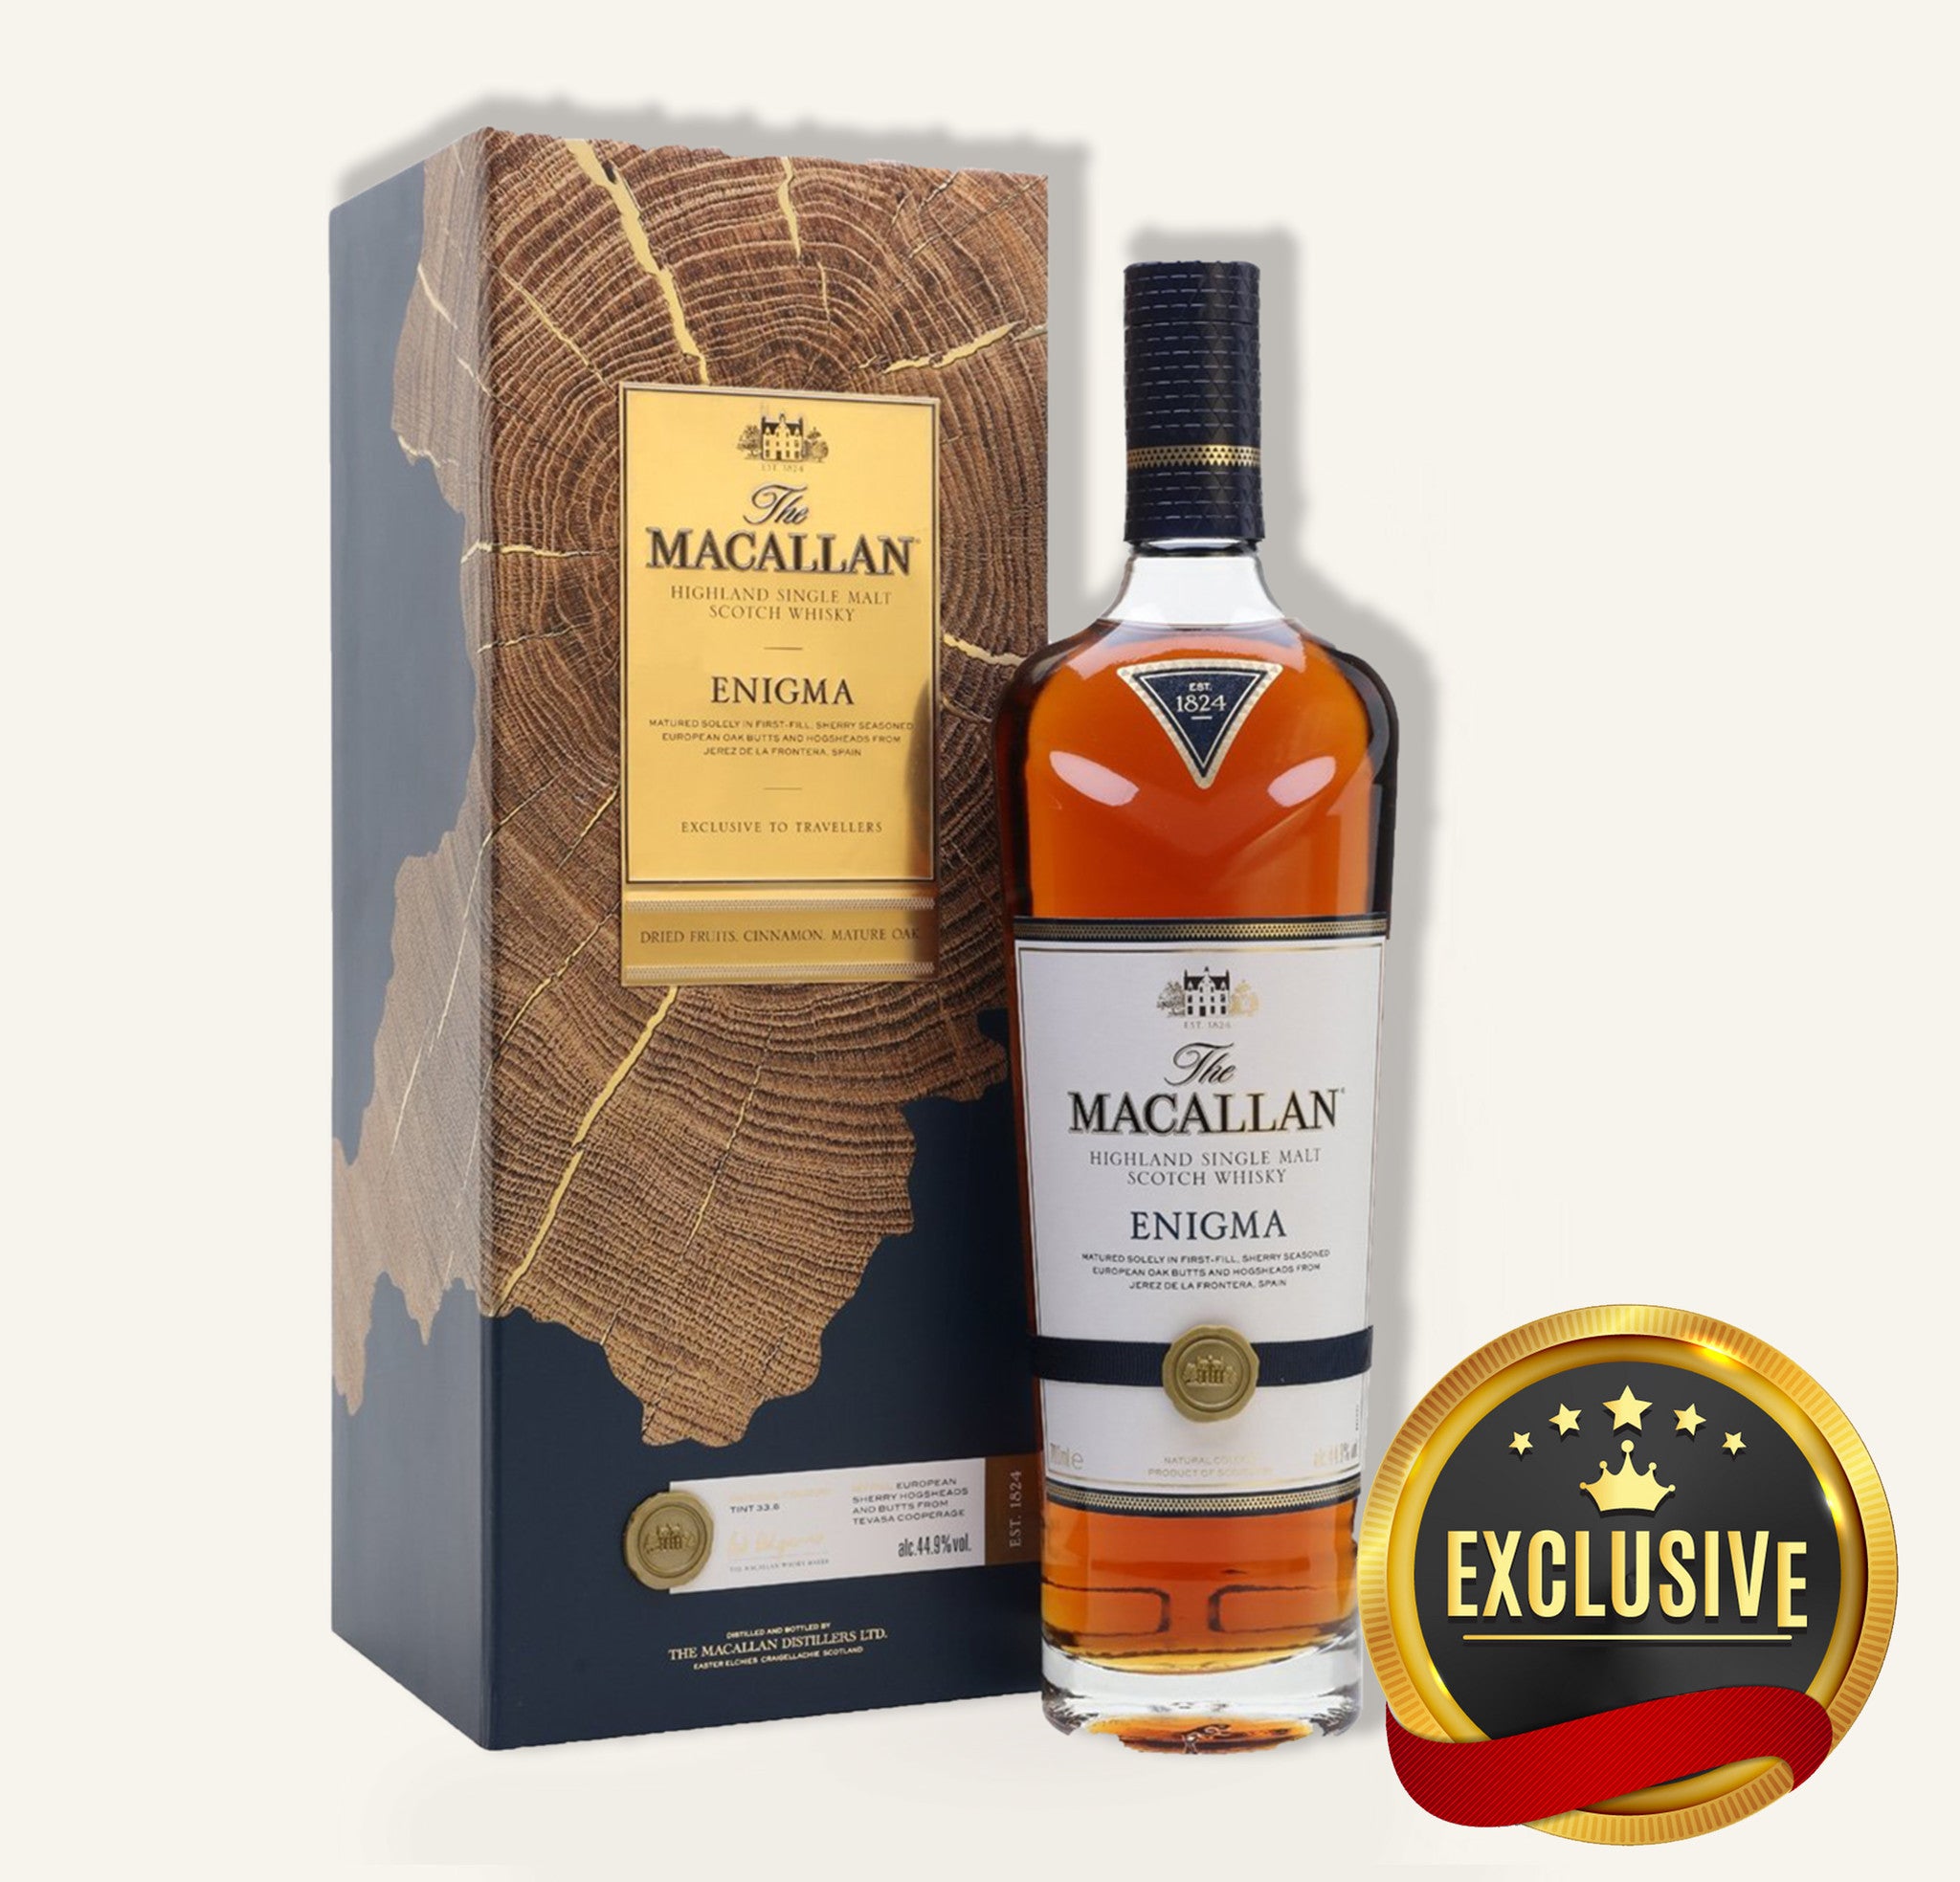 The Macallan 'Enigma' Single Malt Scotch Whisky, Highlands